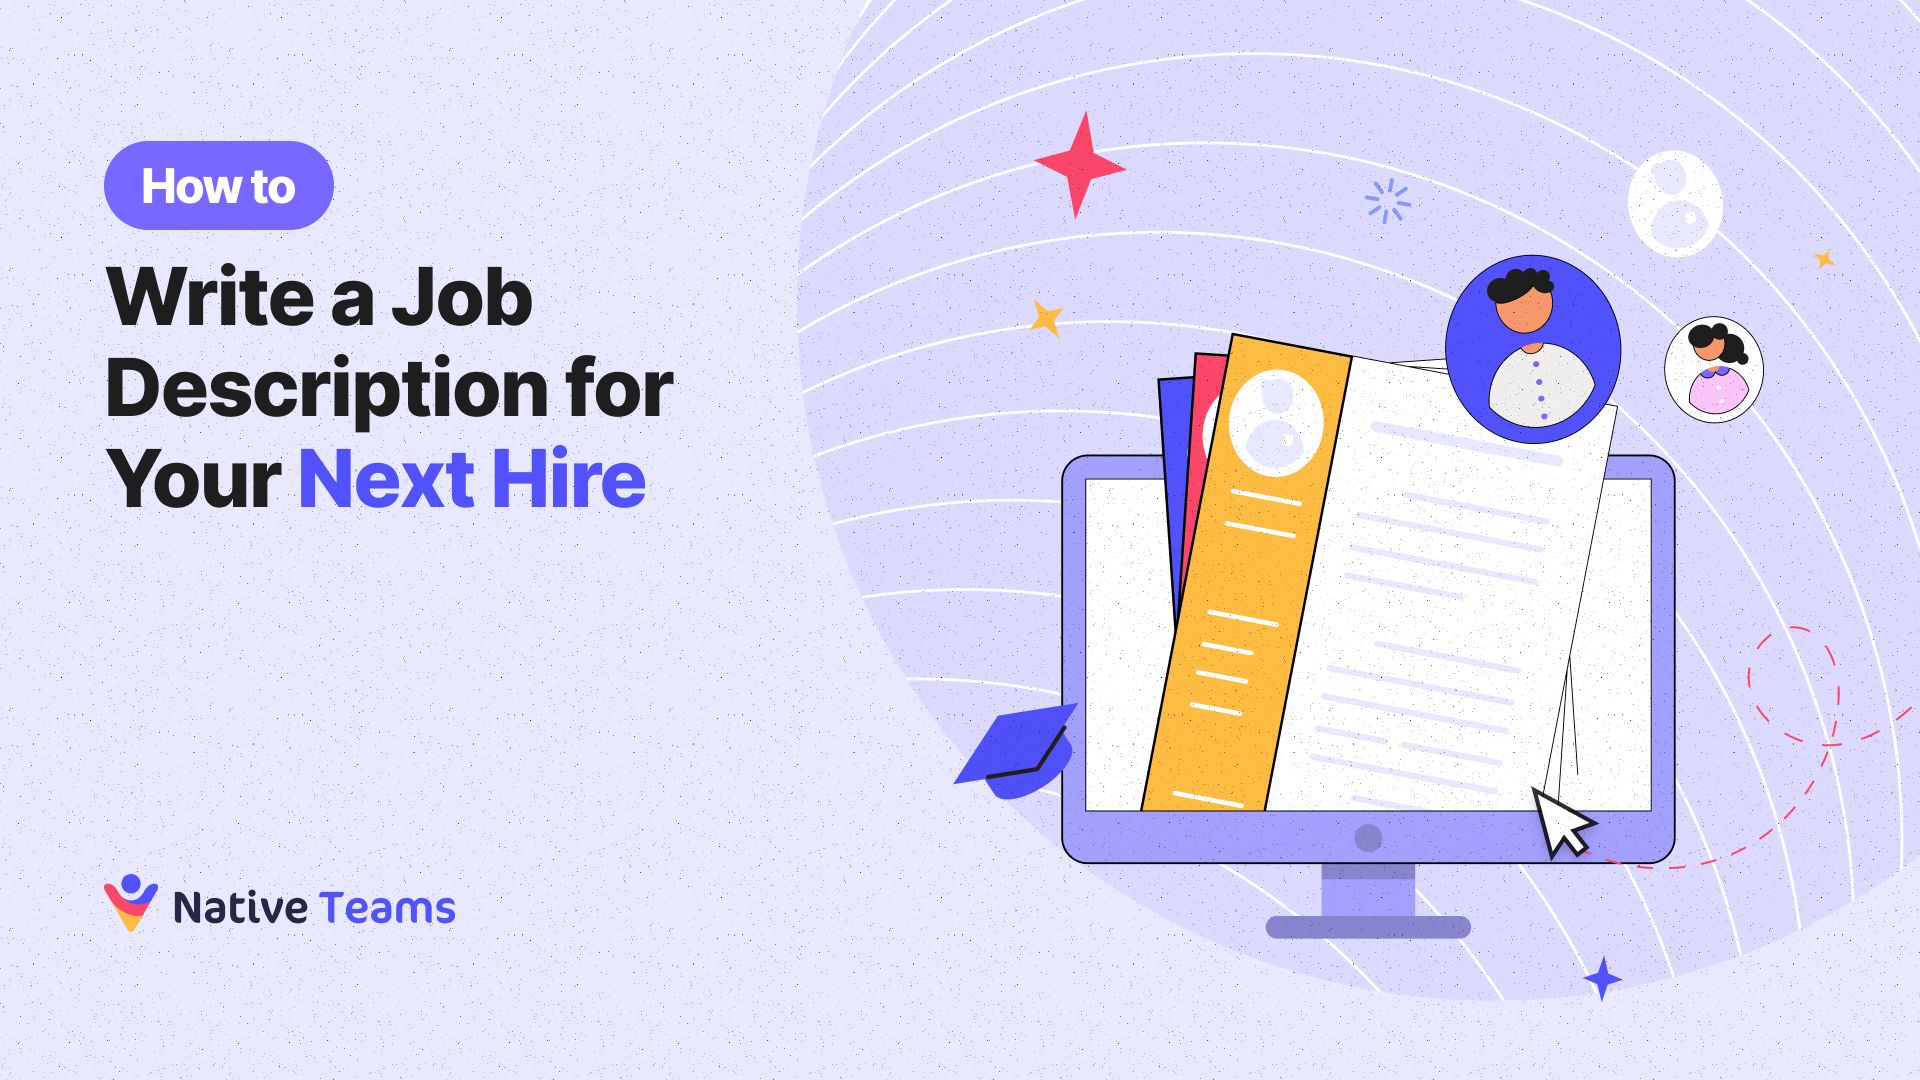 How to Write a Job Description for Your Next Hire